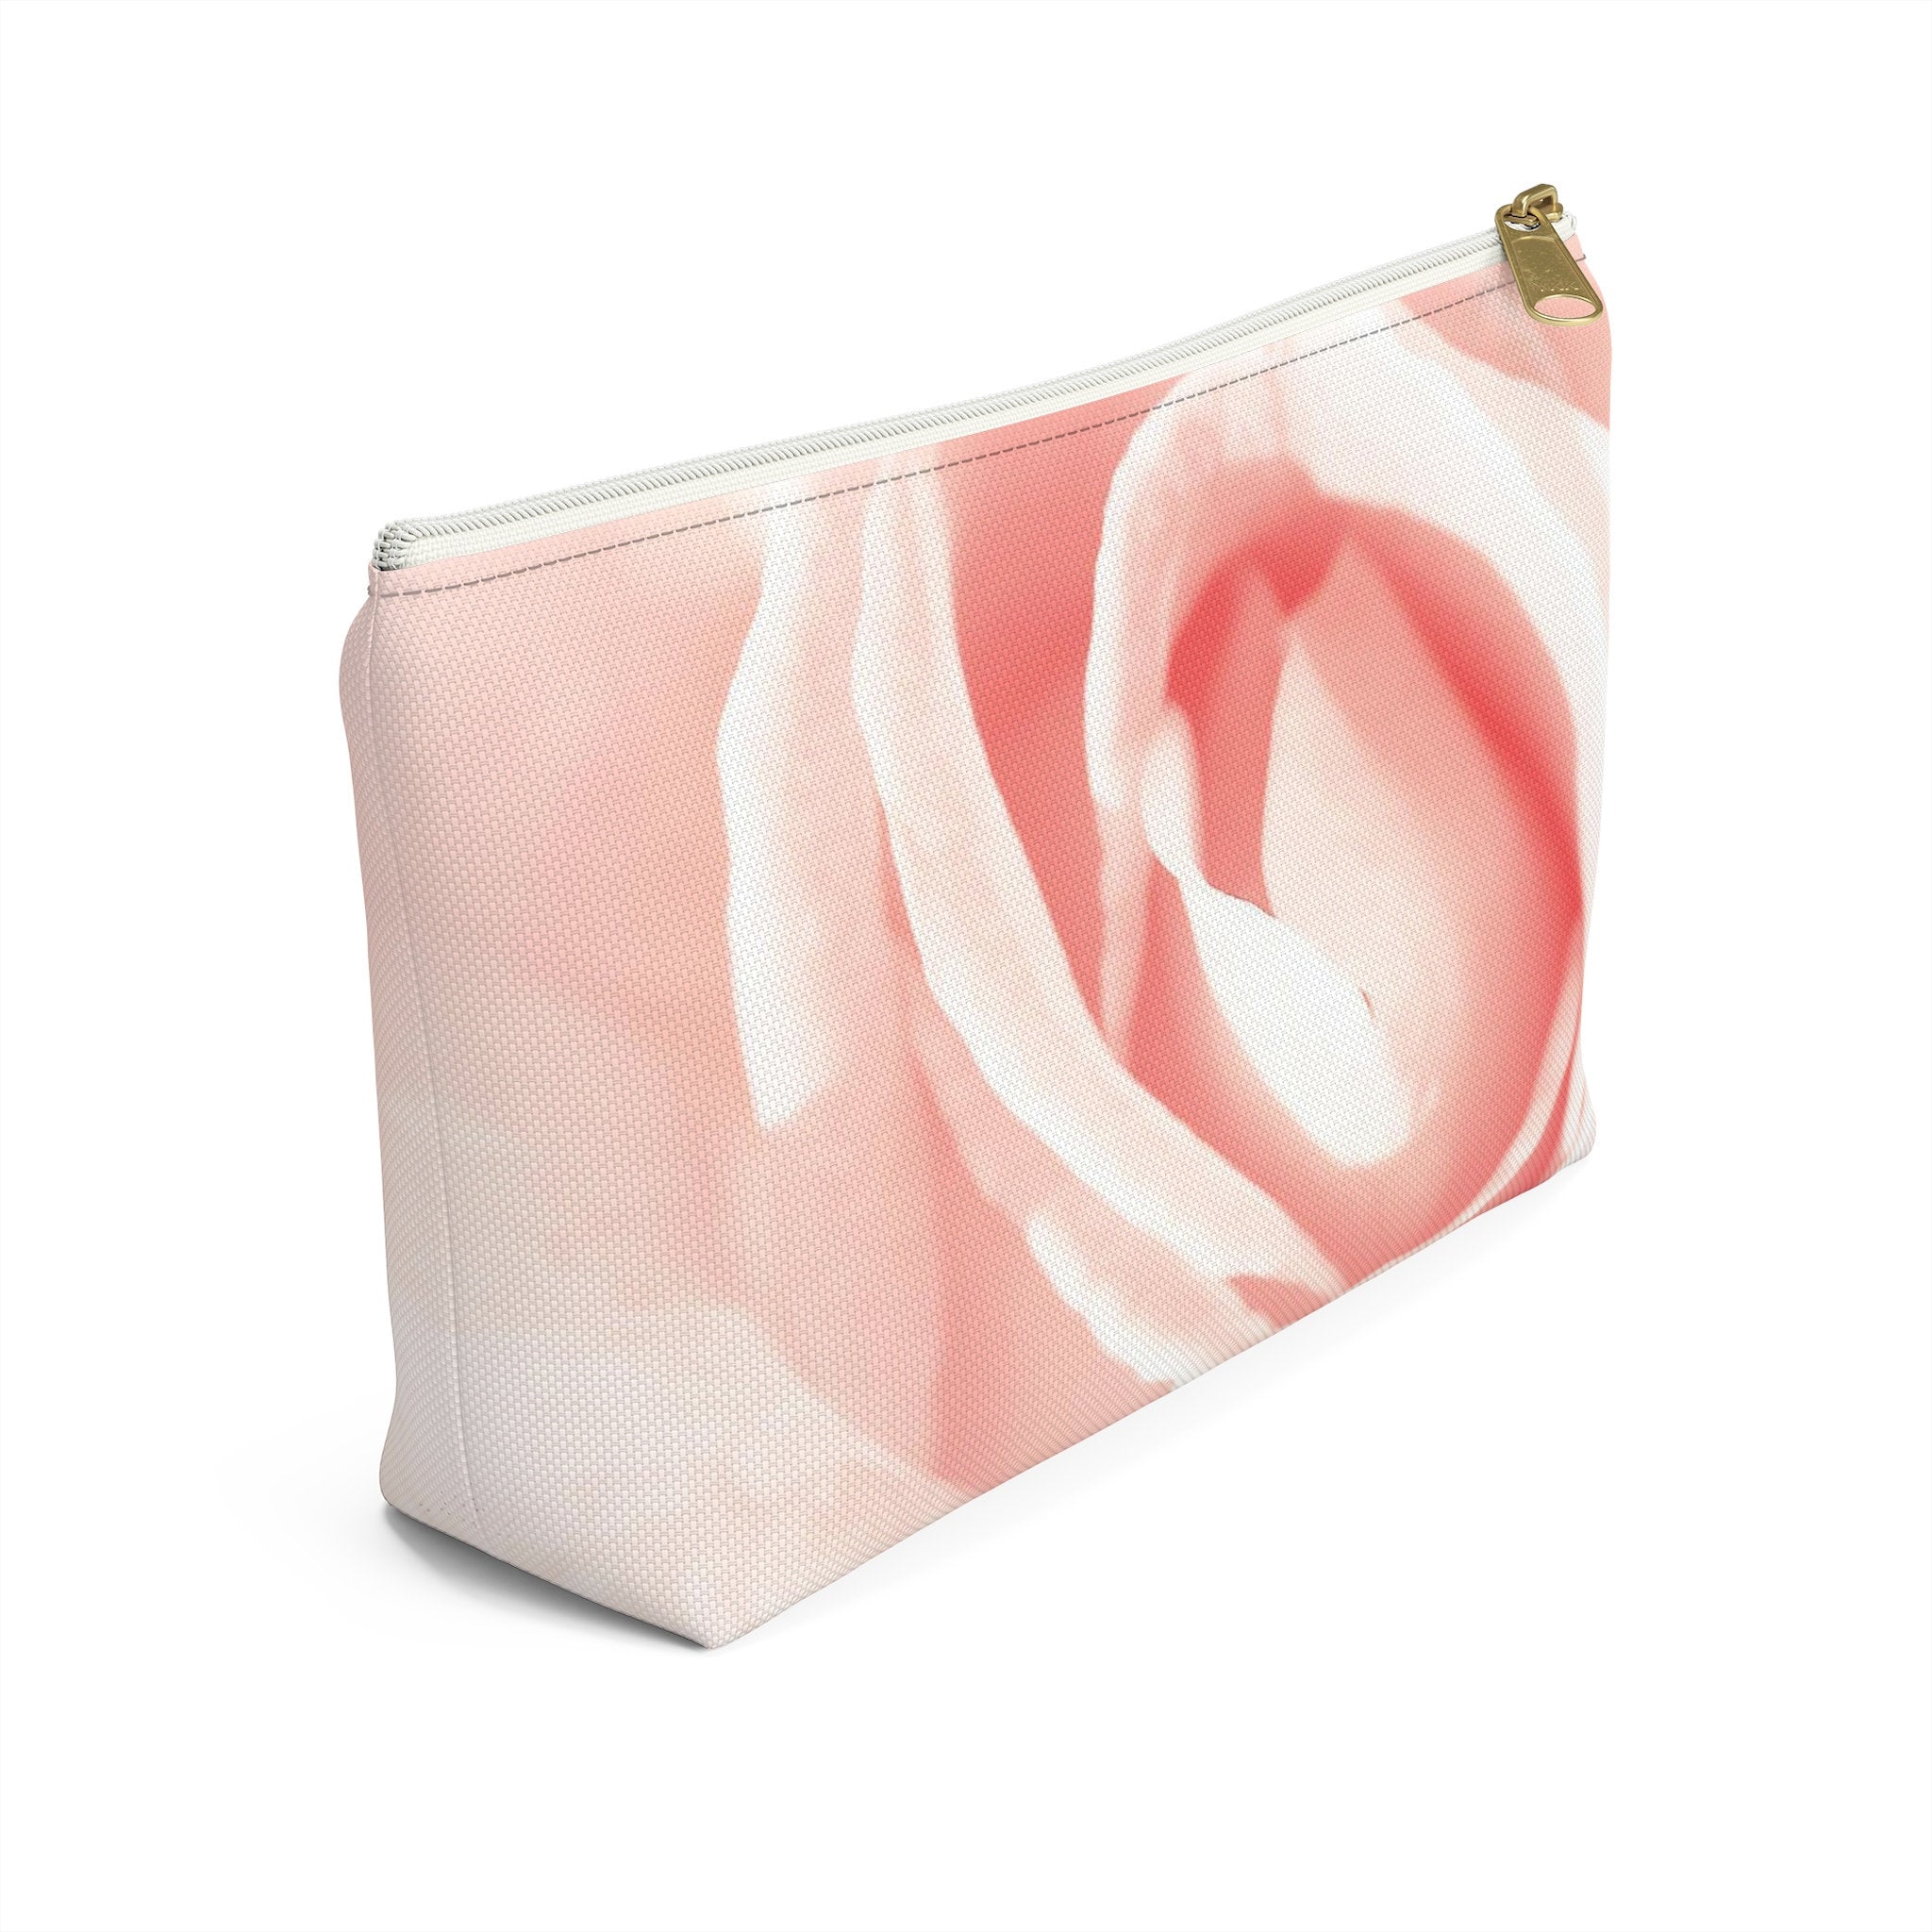 Makeup or Toiletry Bag - Coral Rose Petals Travel Clutch - PH13